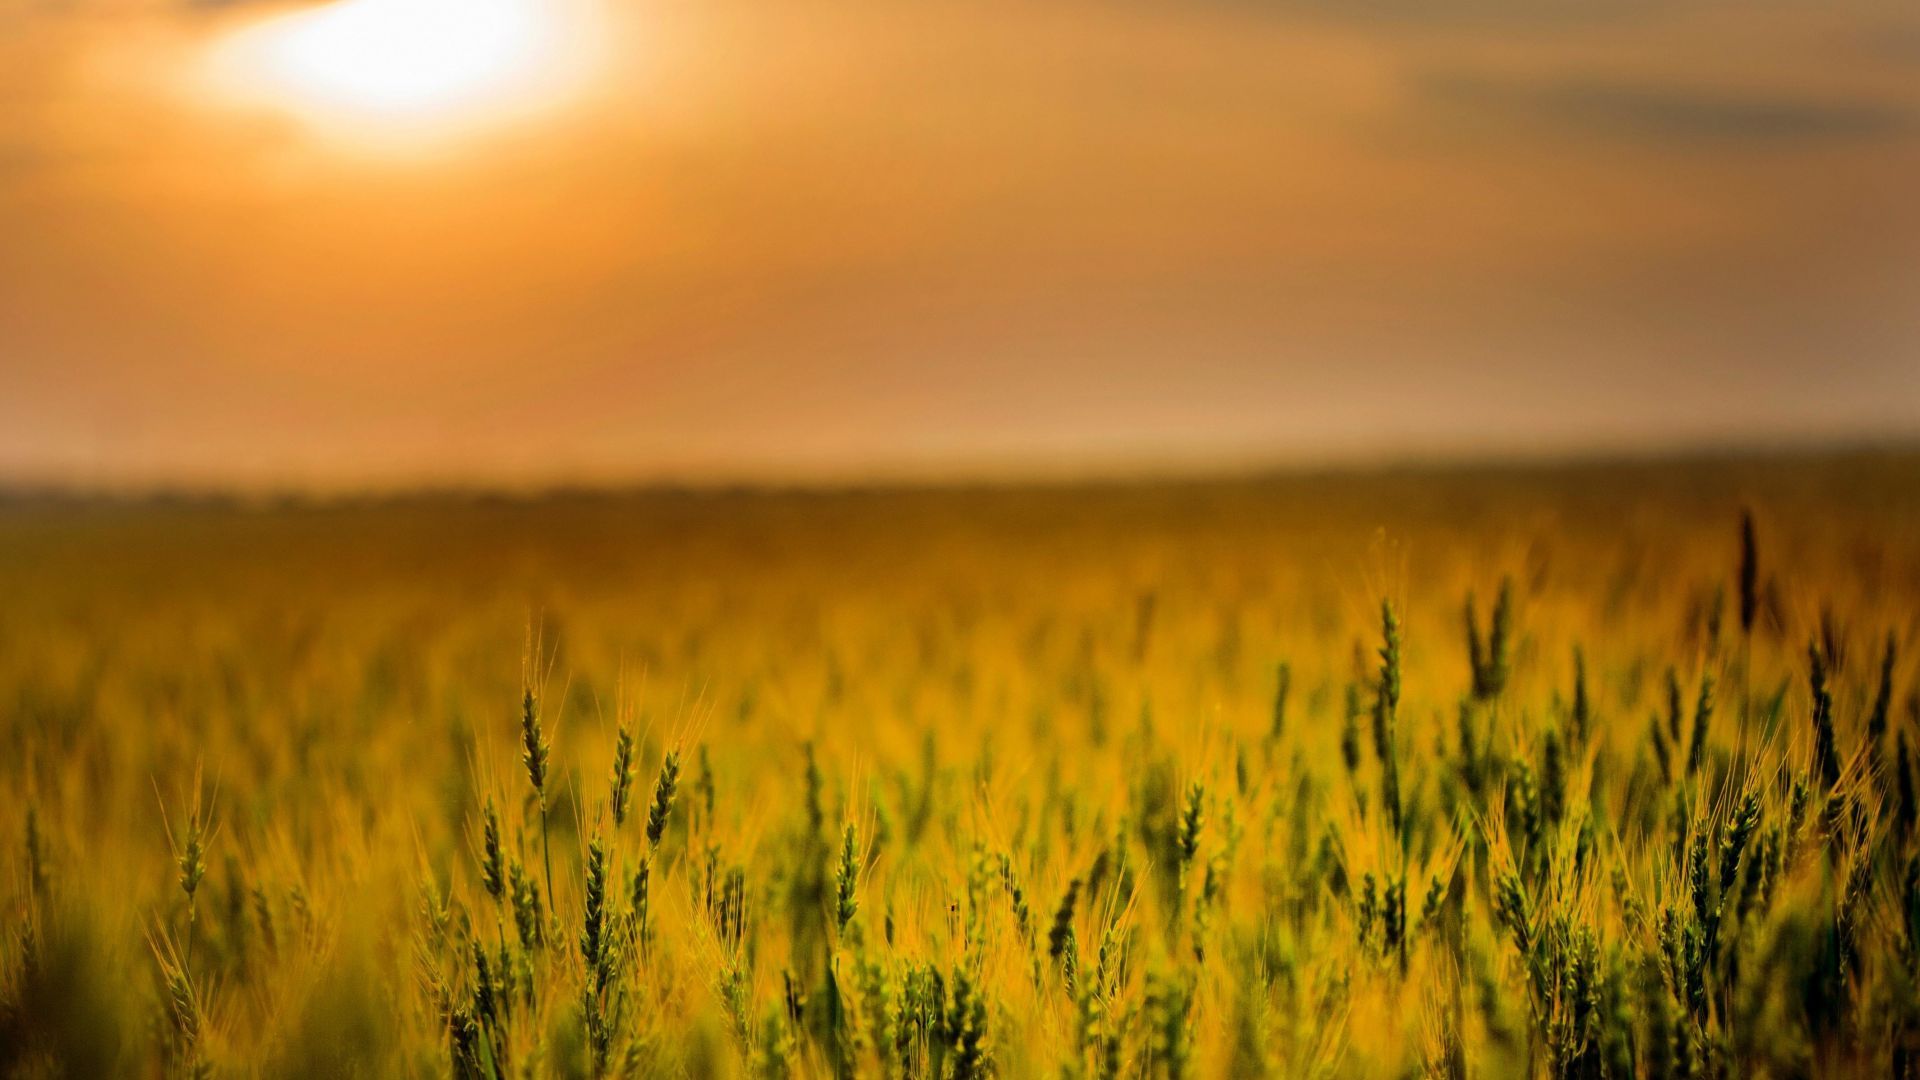 Desktop wallpaper agriculture, cereal, corn farm, sunset, HD image, picture, background, 56dd5b